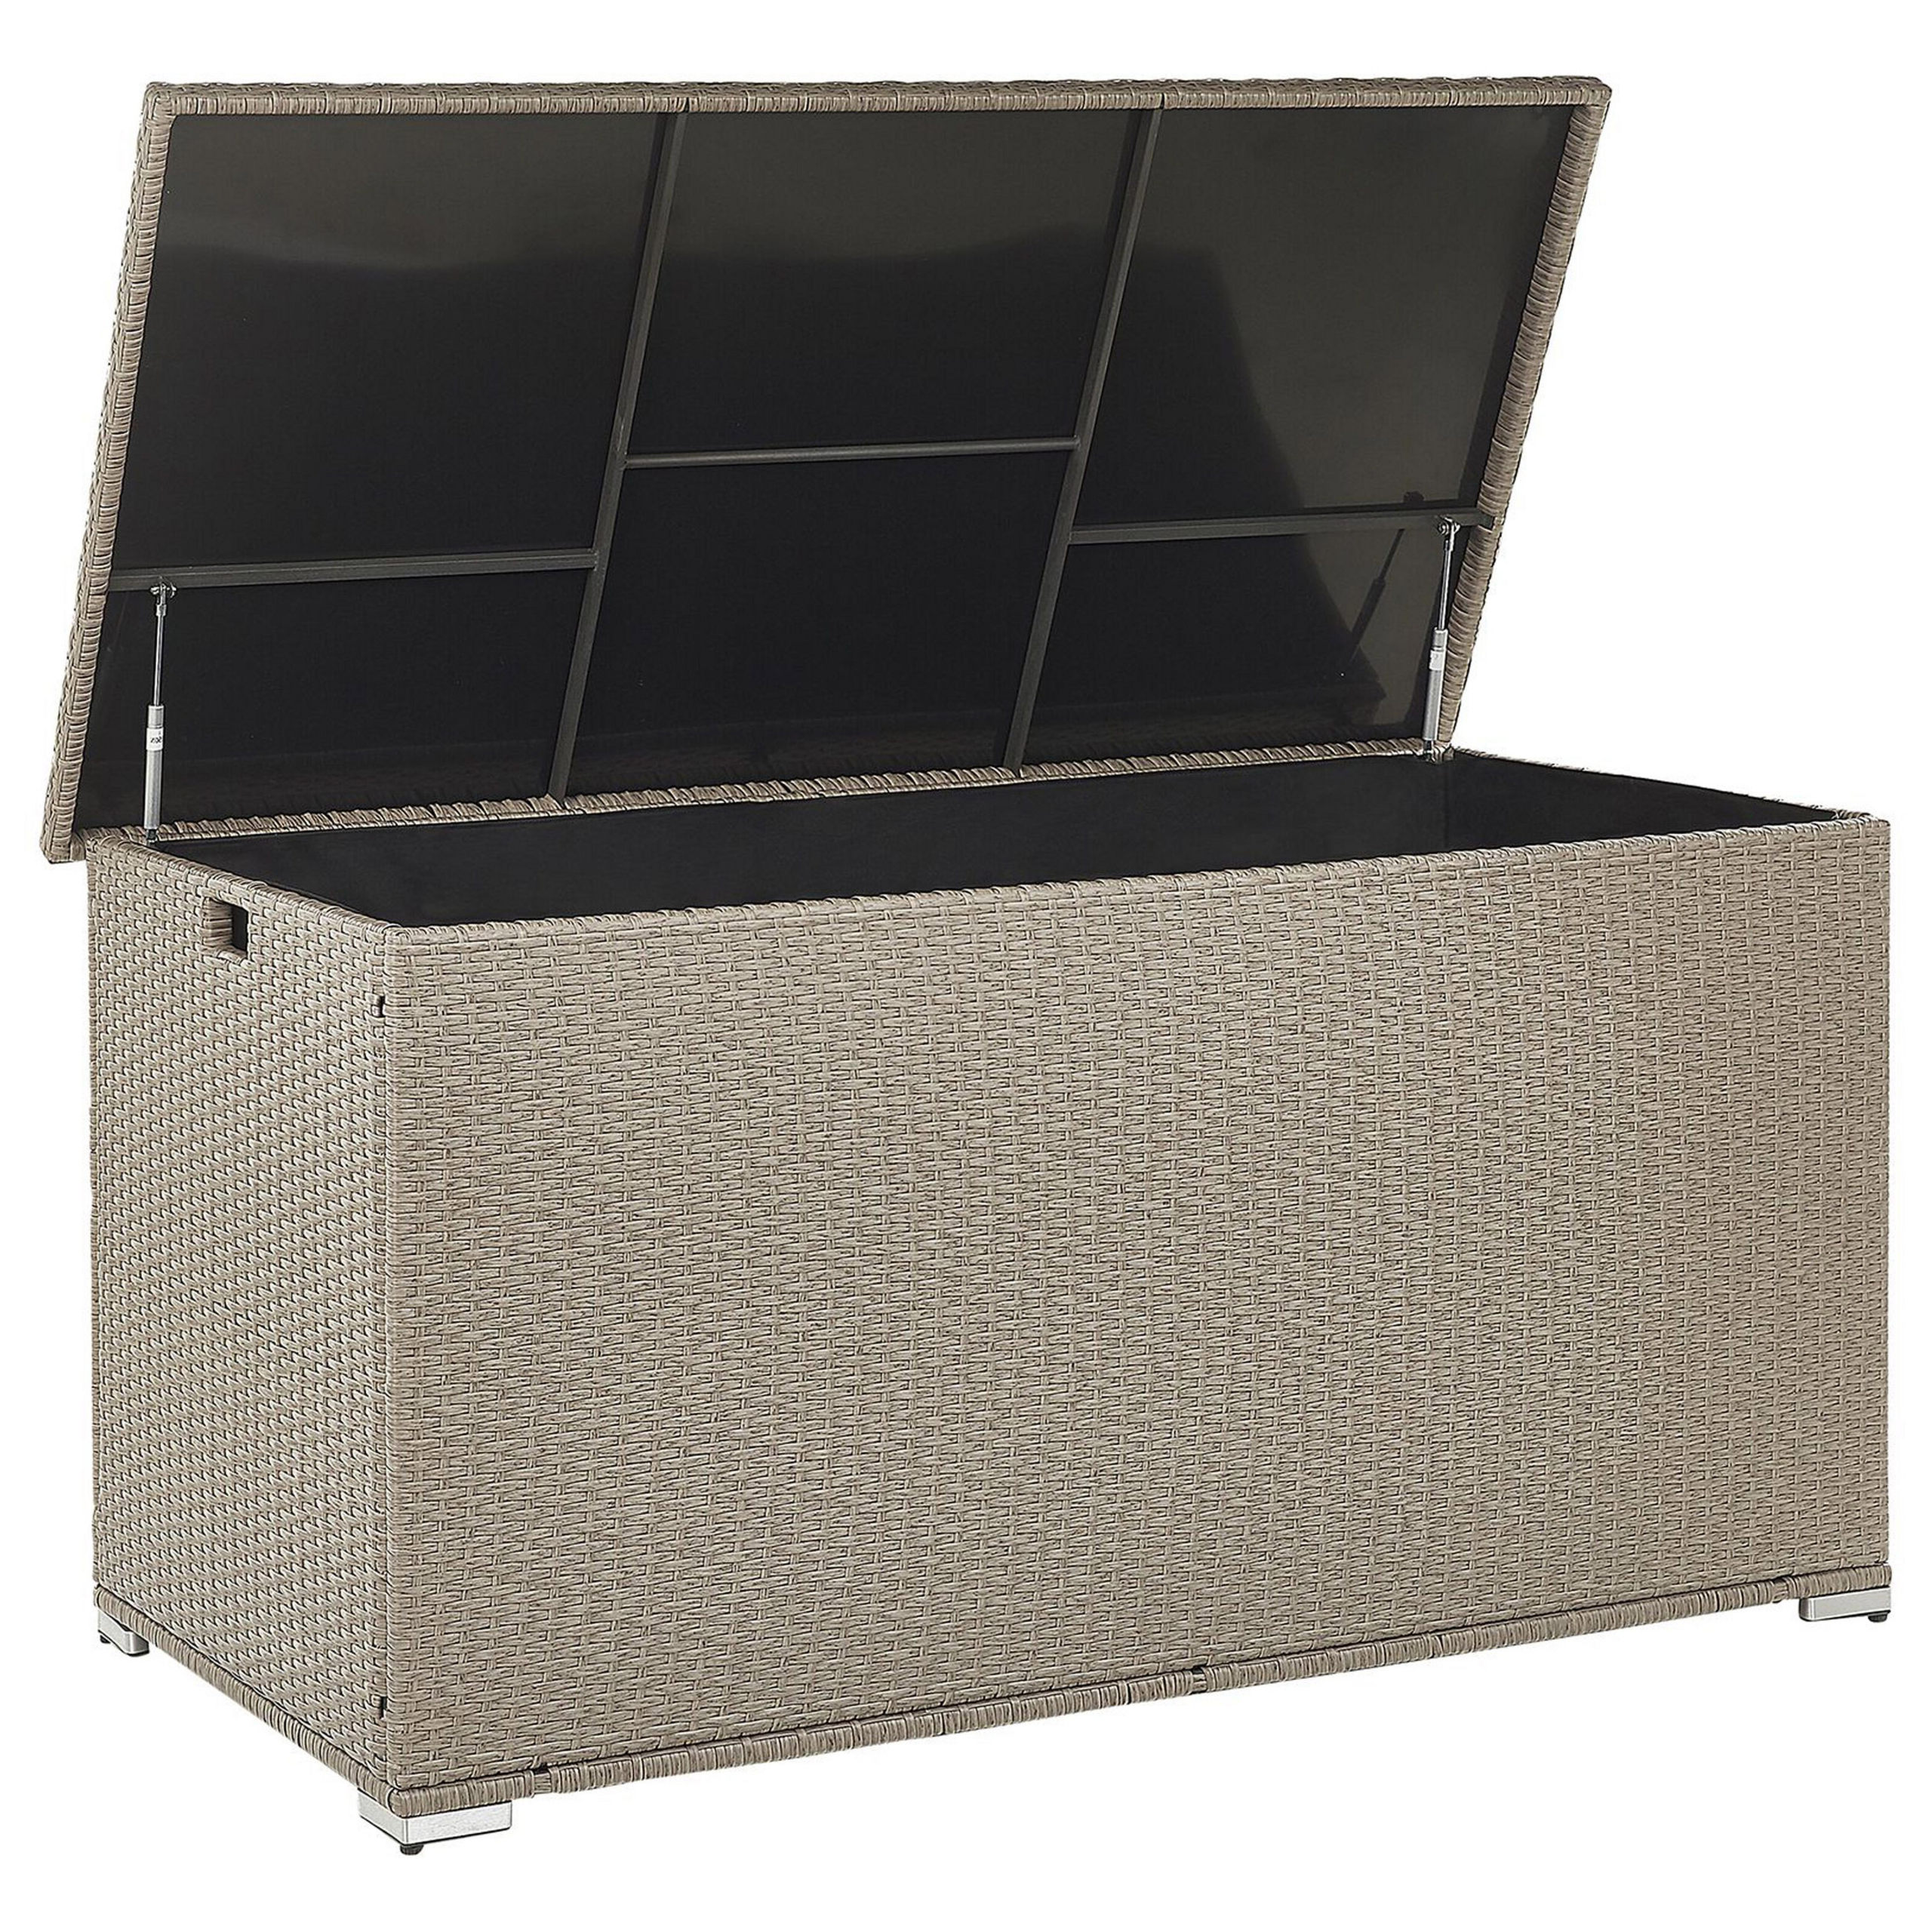 Beliani Outdoor Storage Box Beige Faux Rattan Garden Deck Cushion Chest 155 x 75 cm Material:PE Rattan Size:75x80x155